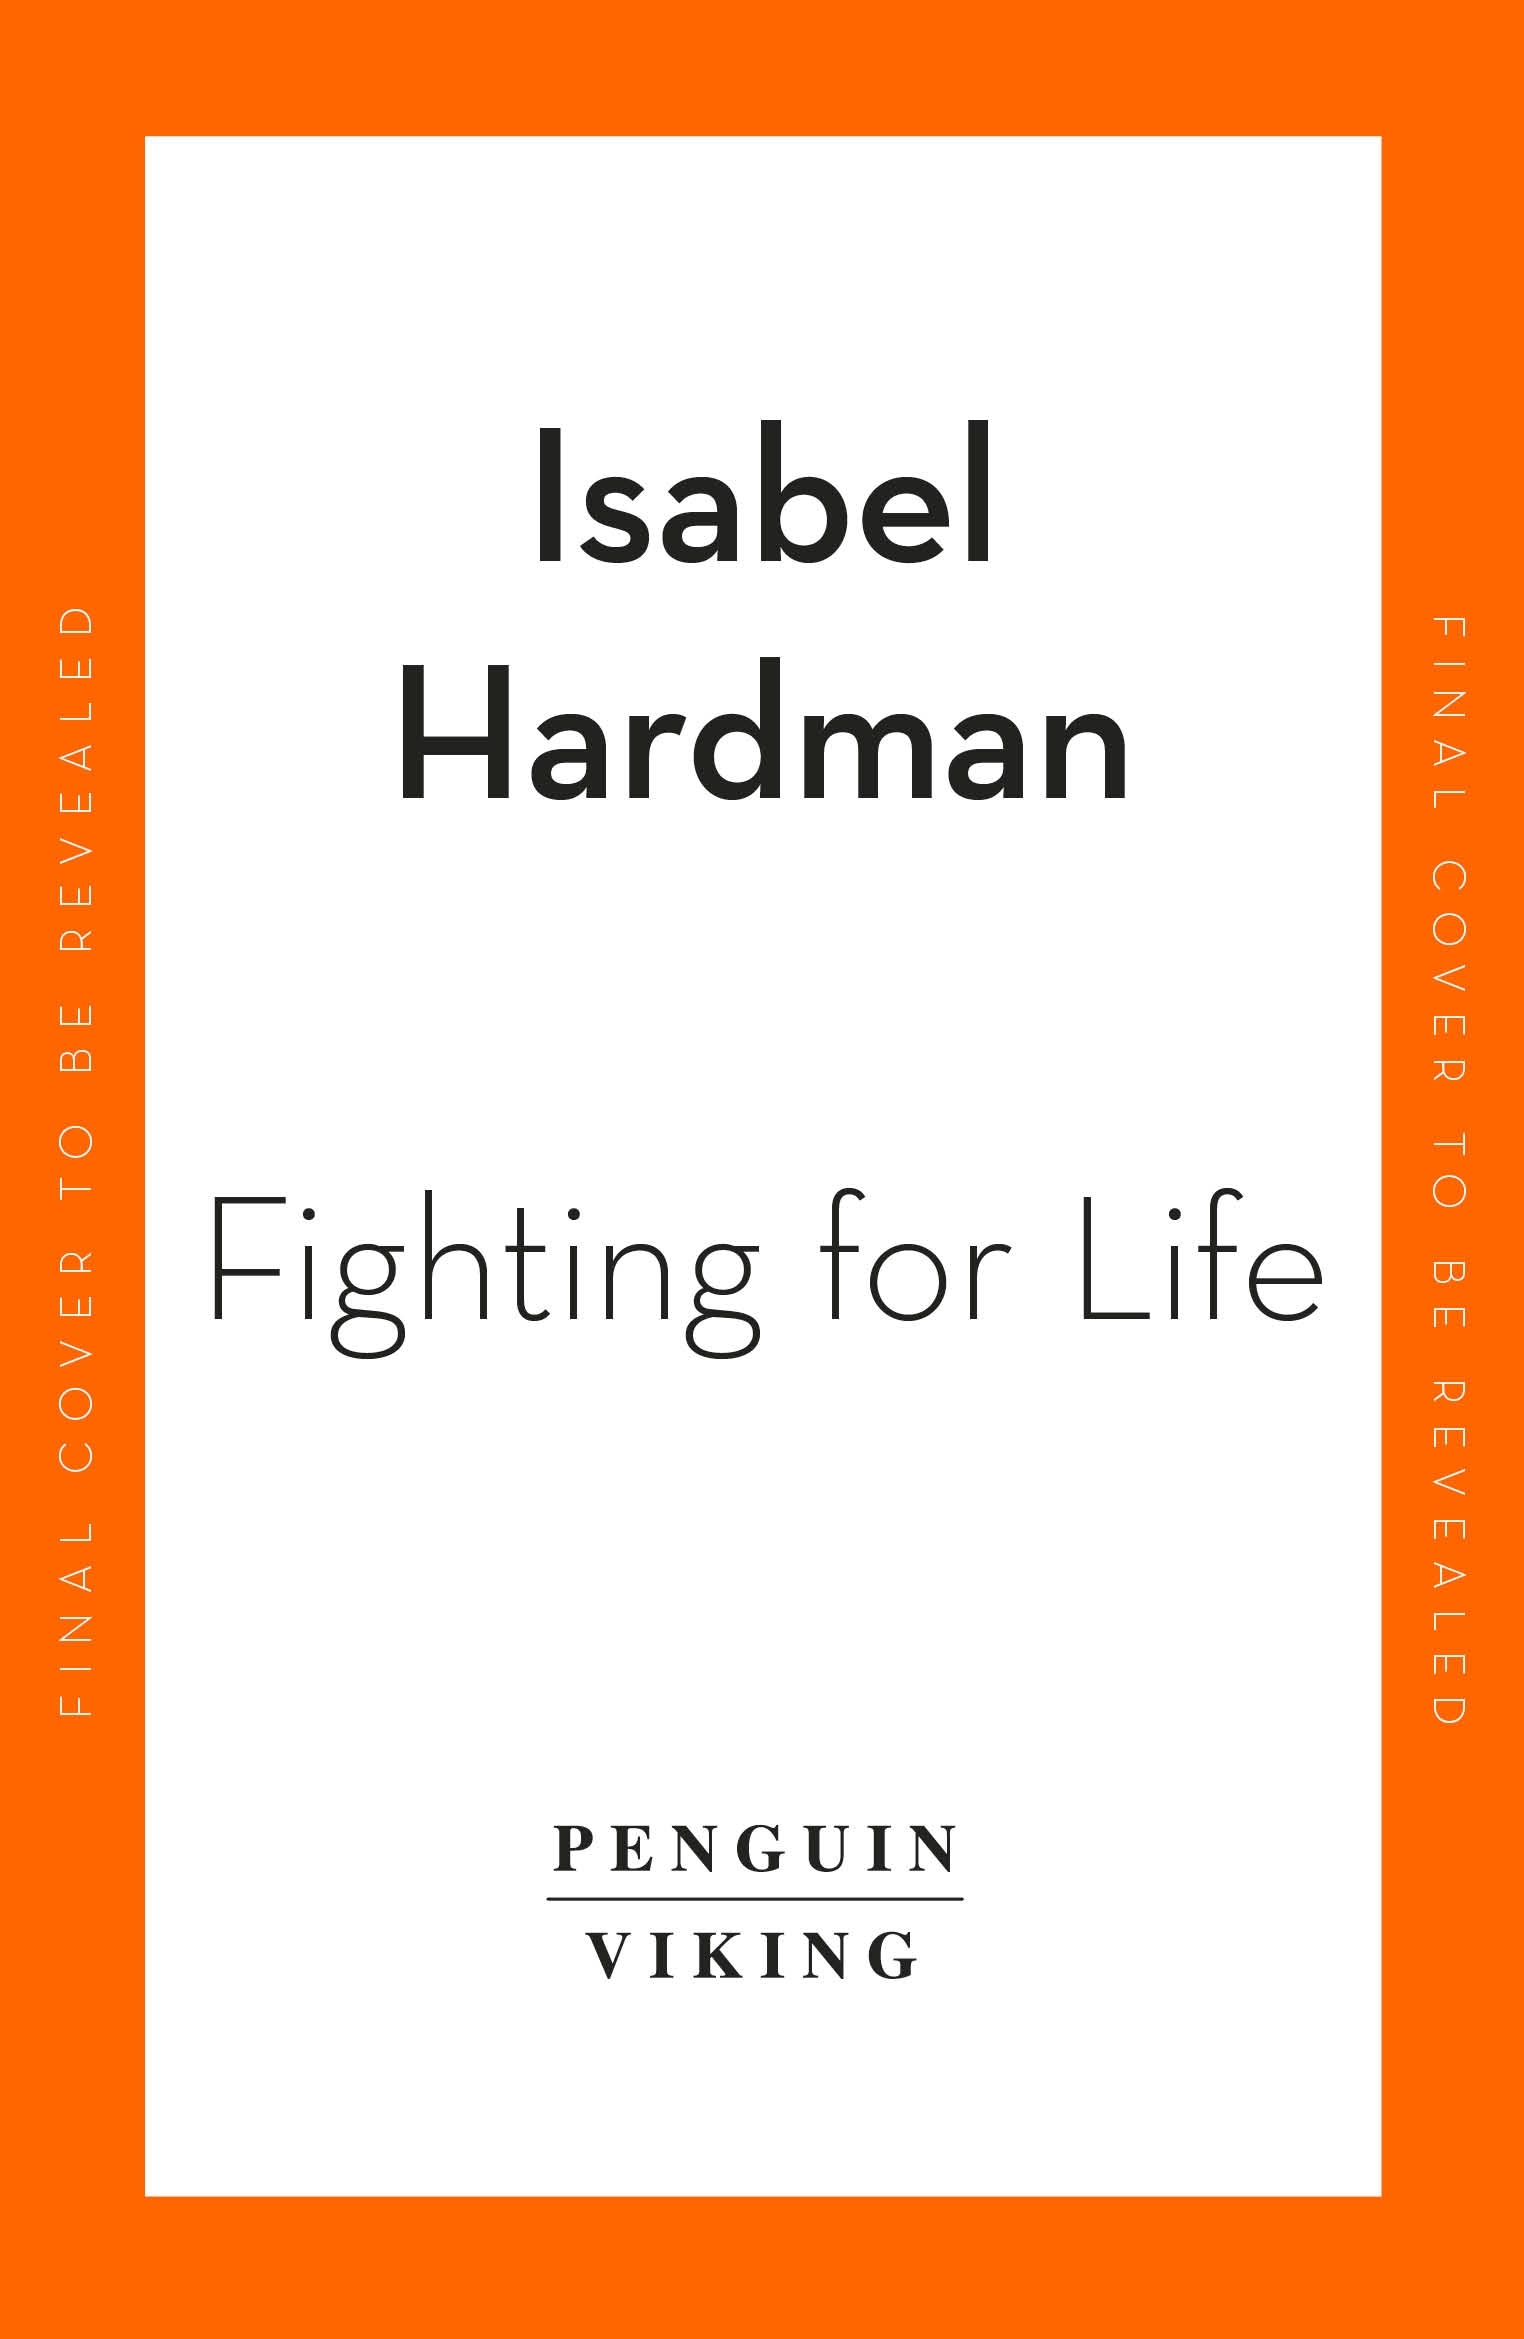 Book “Fighting for Life” by Isabel Hardman — September 15, 2022